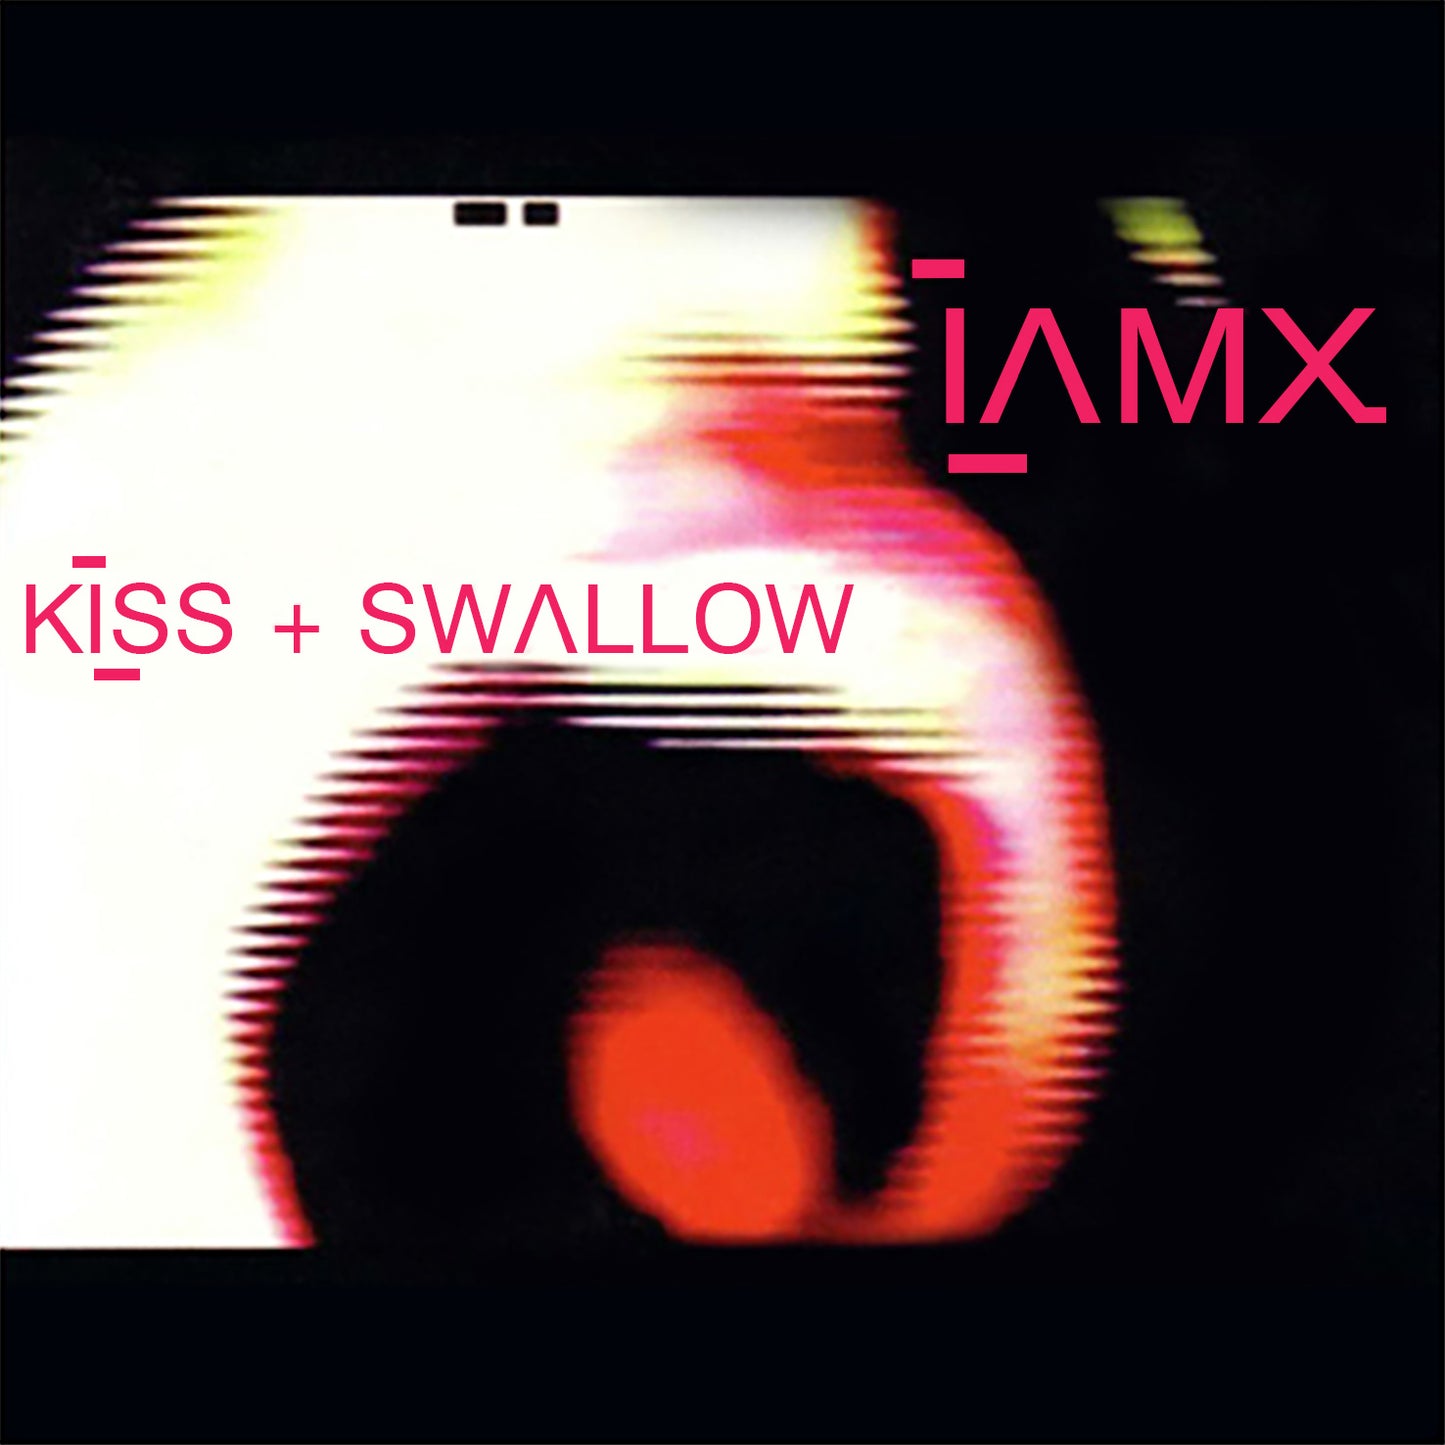 CD - Kiss + Swallow